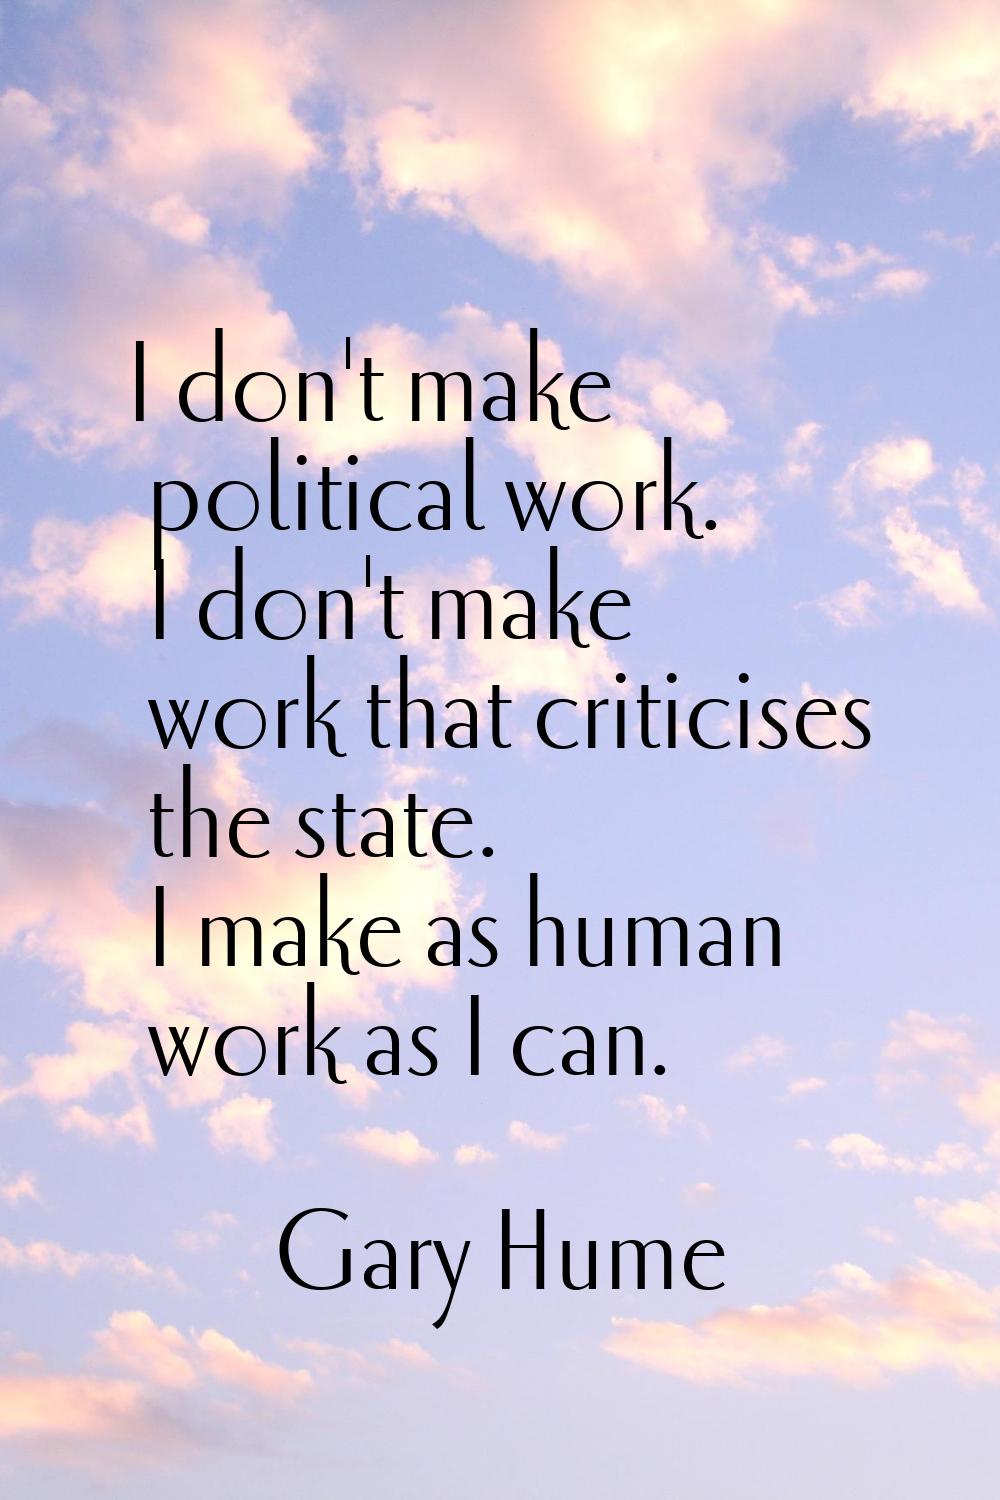 I don't make political work. I don't make work that criticises the state. I make as human work as I